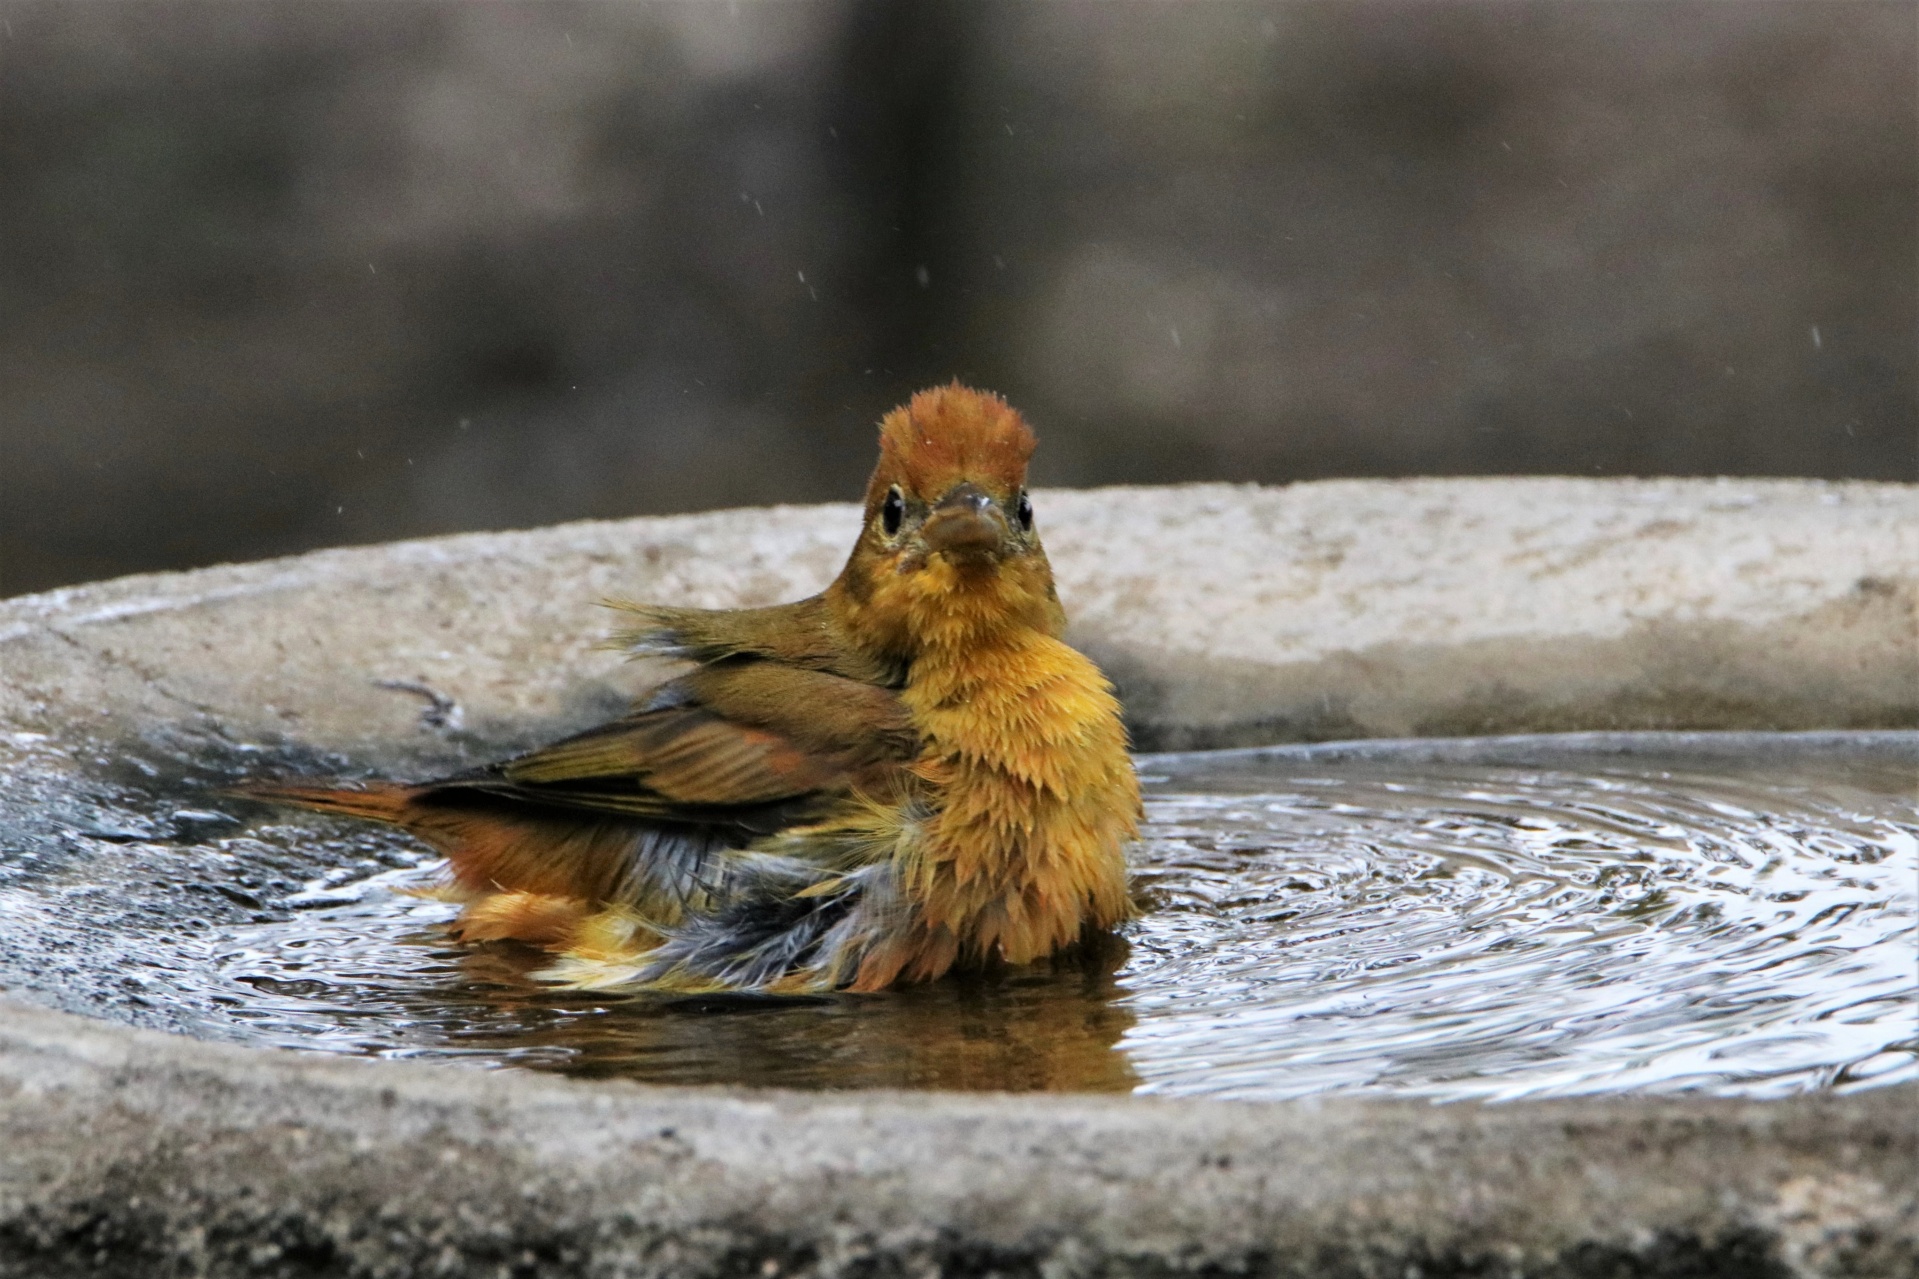 Summer Tanager In Bird Bath 2